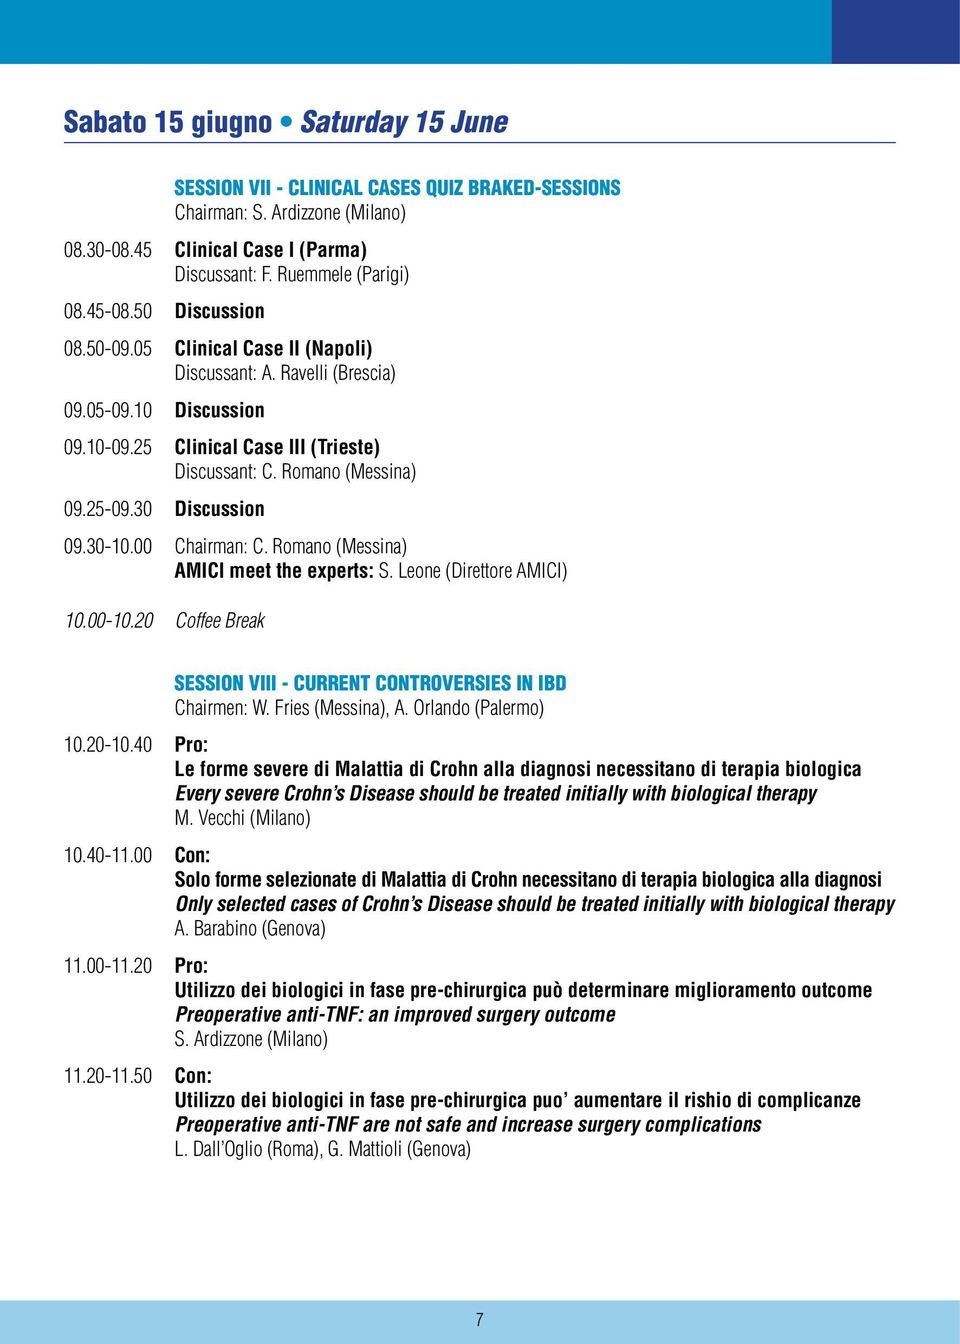 30 Discussion 09.30-10.00 Chairman: C. Romano (Messina) AMICI meet the experts: S. Leone (Direttore AMICI) 10.00-10.20 Coffee Break SESSION VIII - CURRENT CONTROVERSIES IN IBD Chairmen: W.